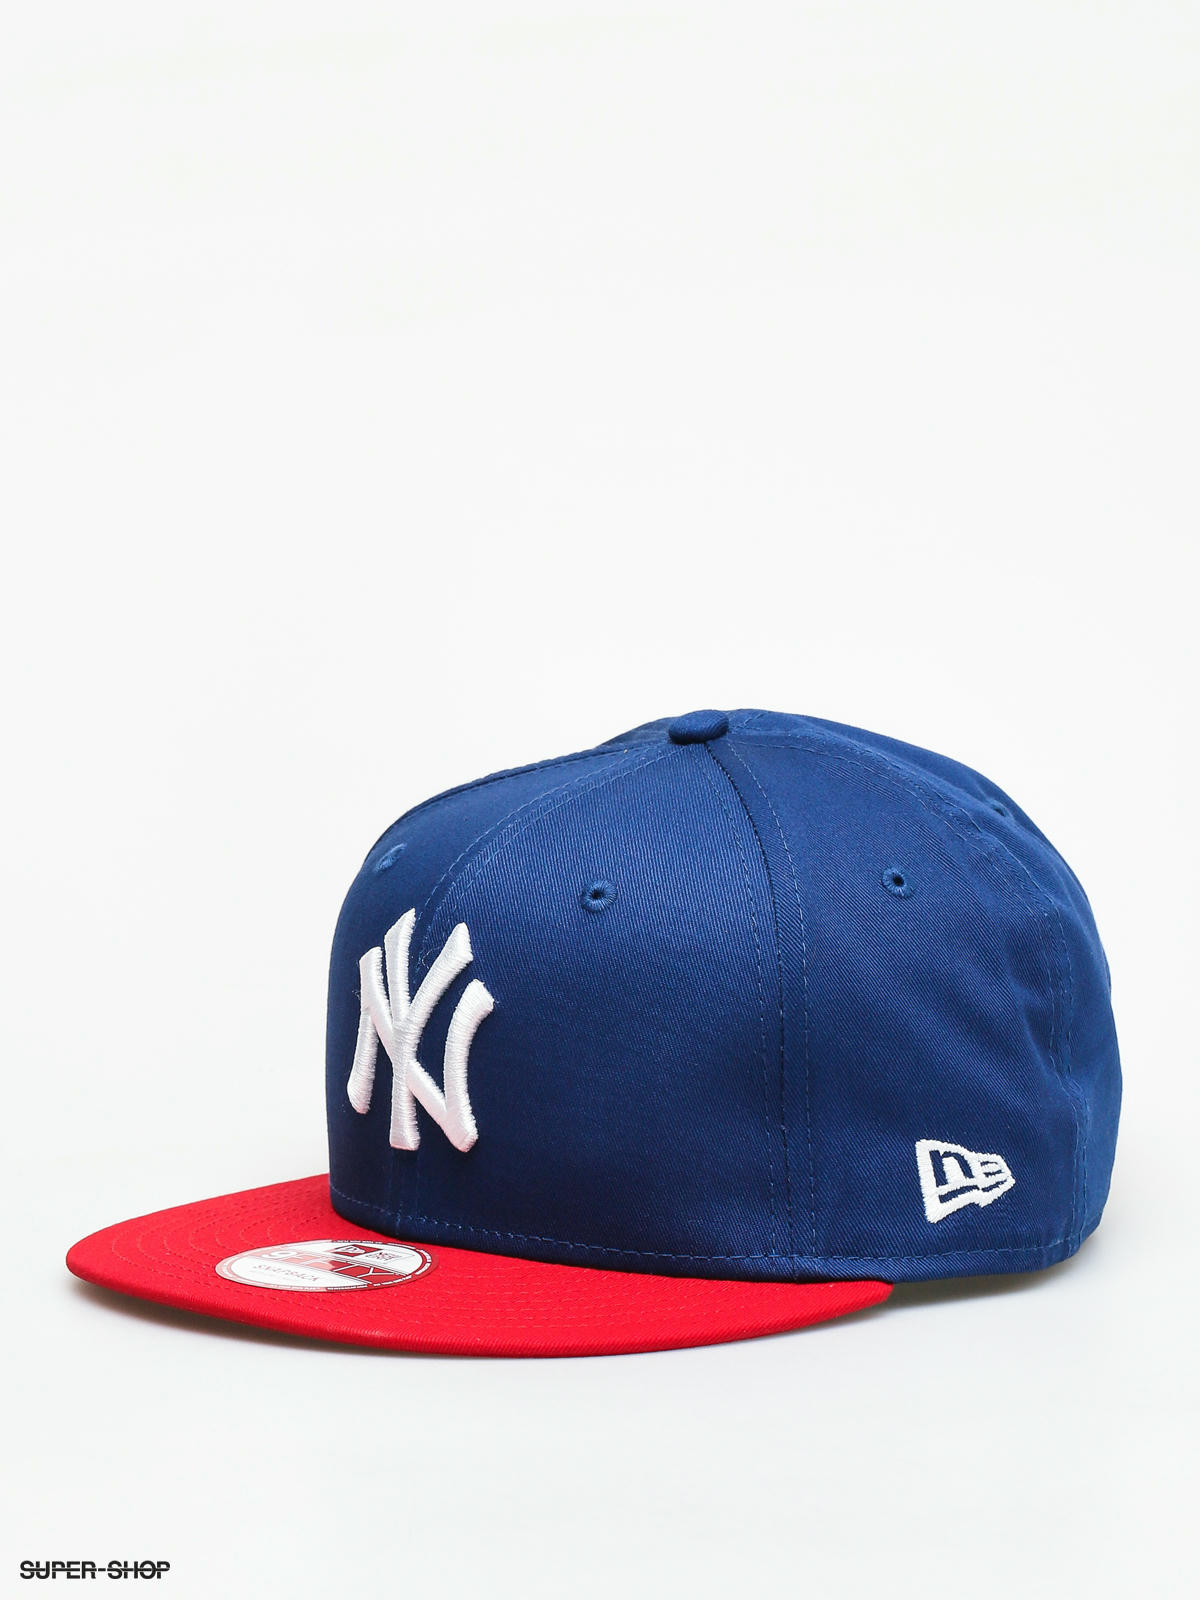 MLB Toronto Blue Jays MensWomens Unisex Adjustable Cotton Baseball Cap Hat Powder Blue  Canadian Tire